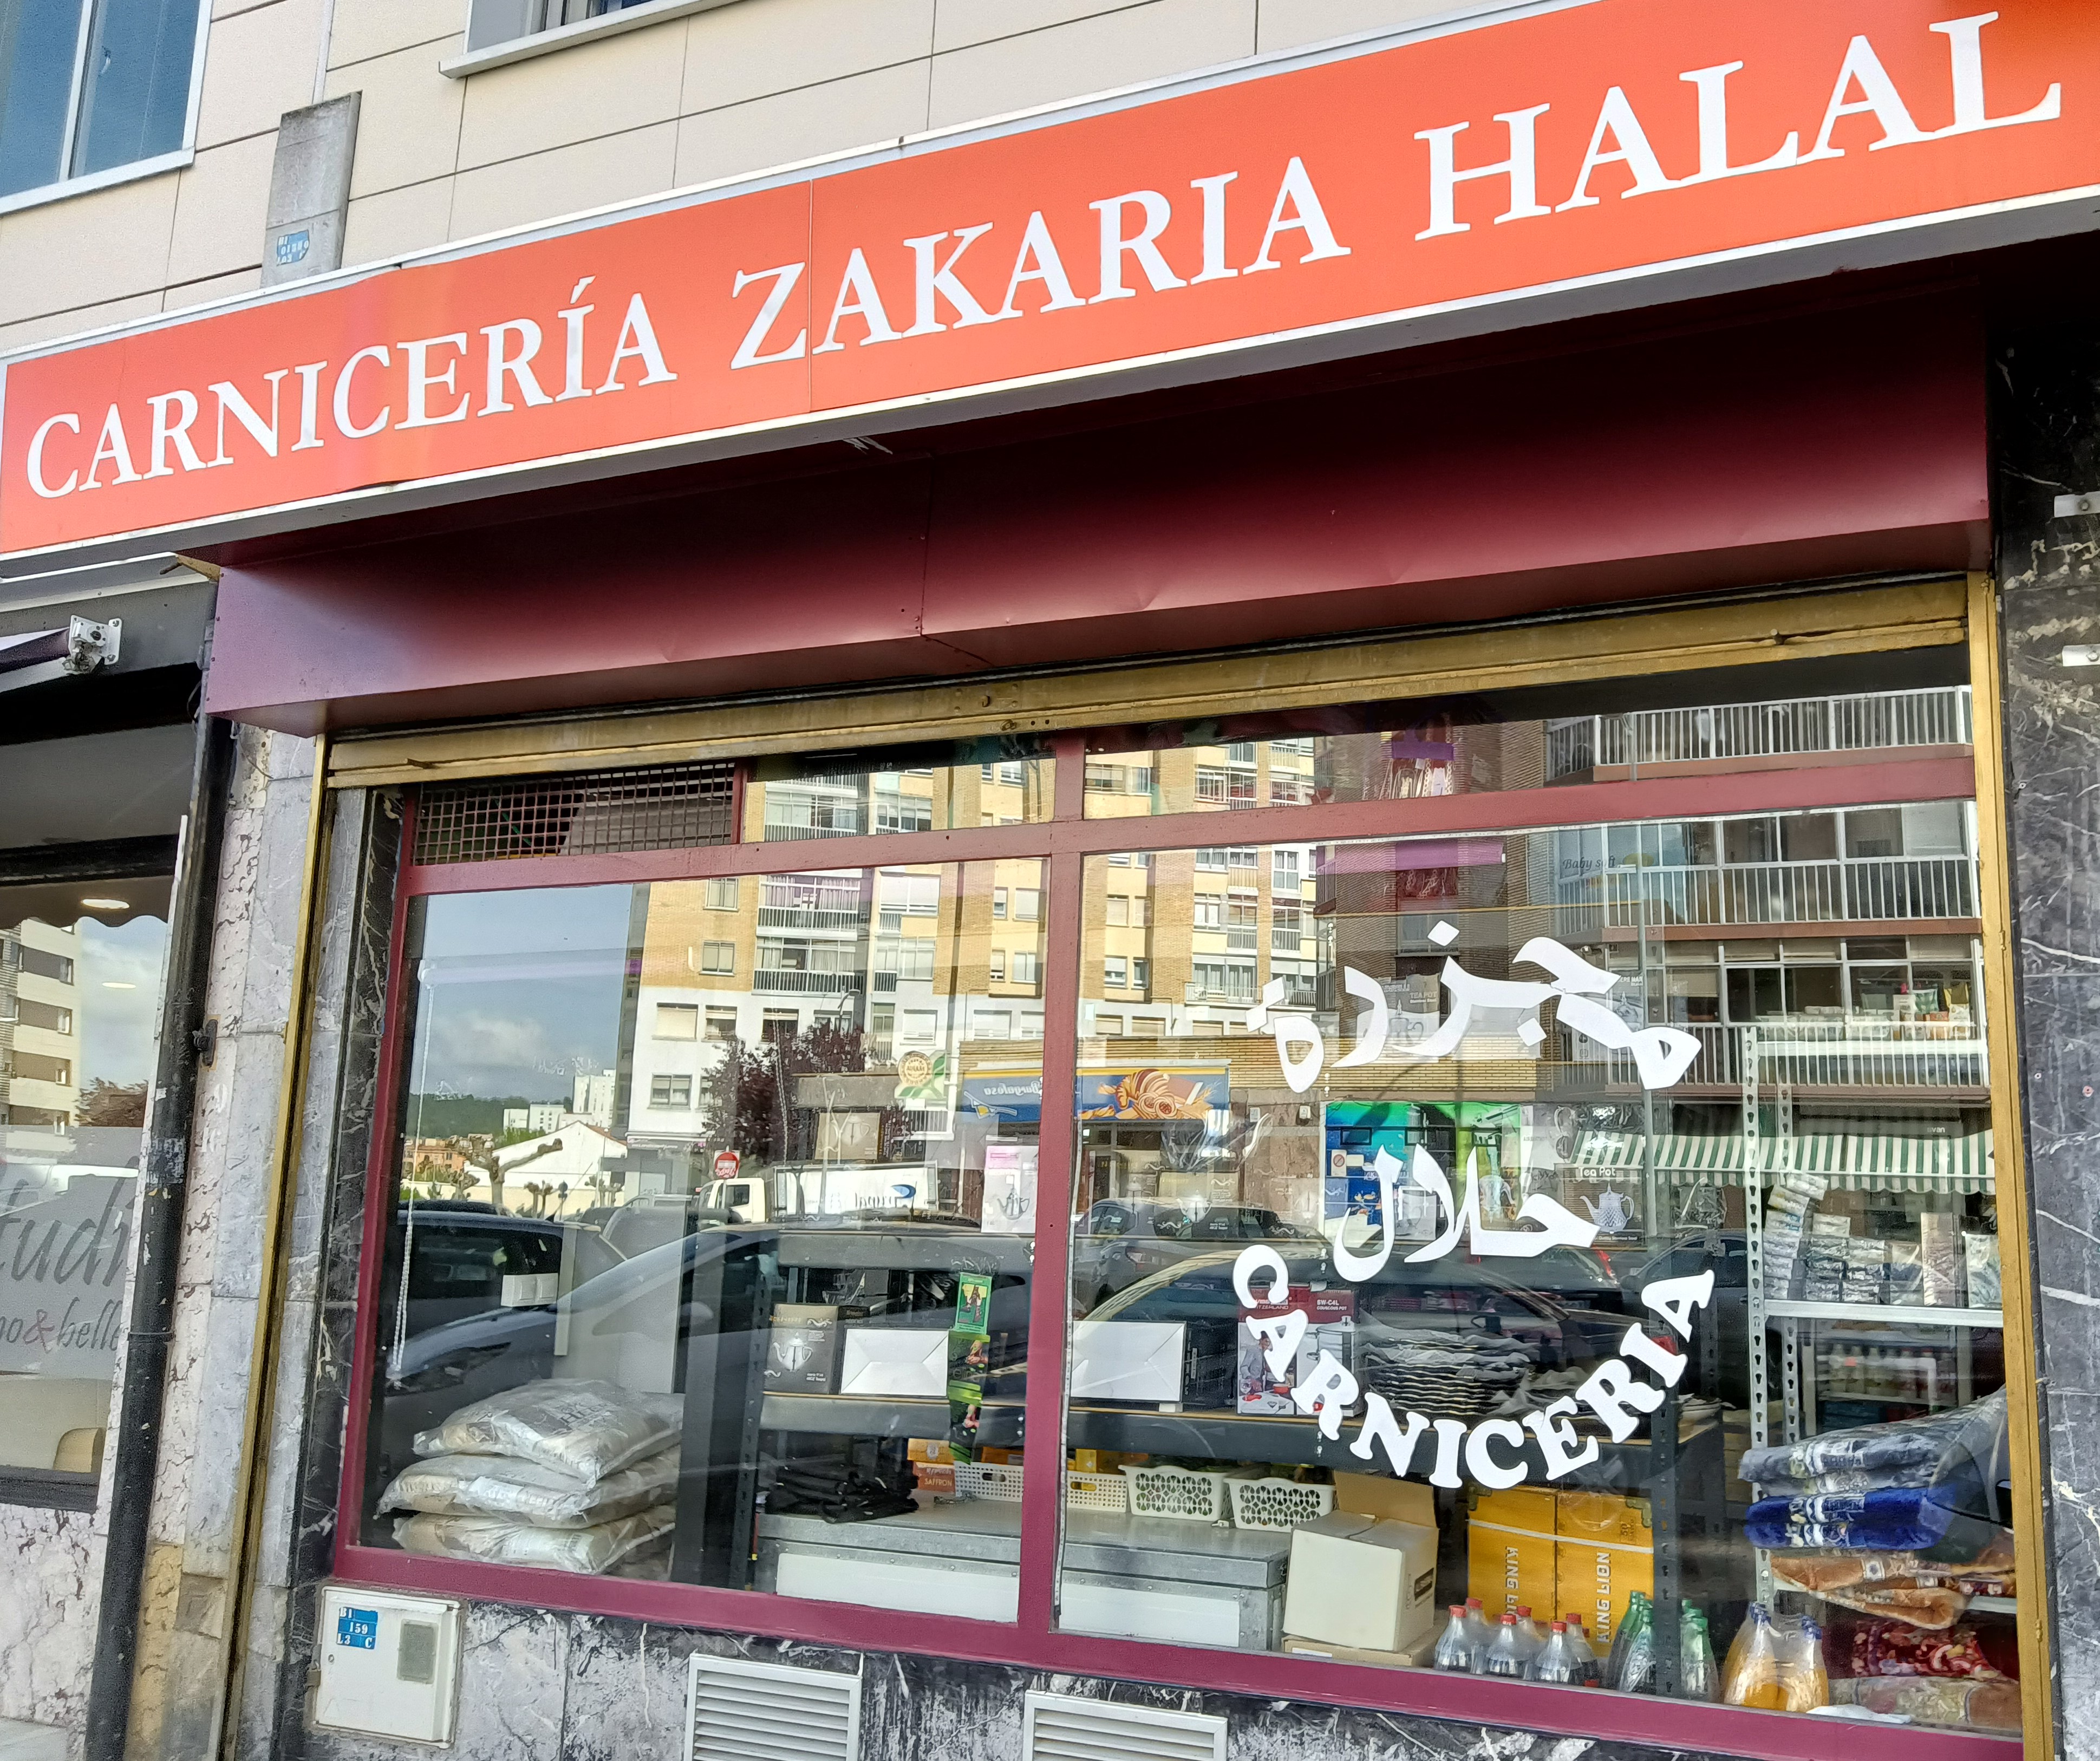 Carnicería Zakaia Halal